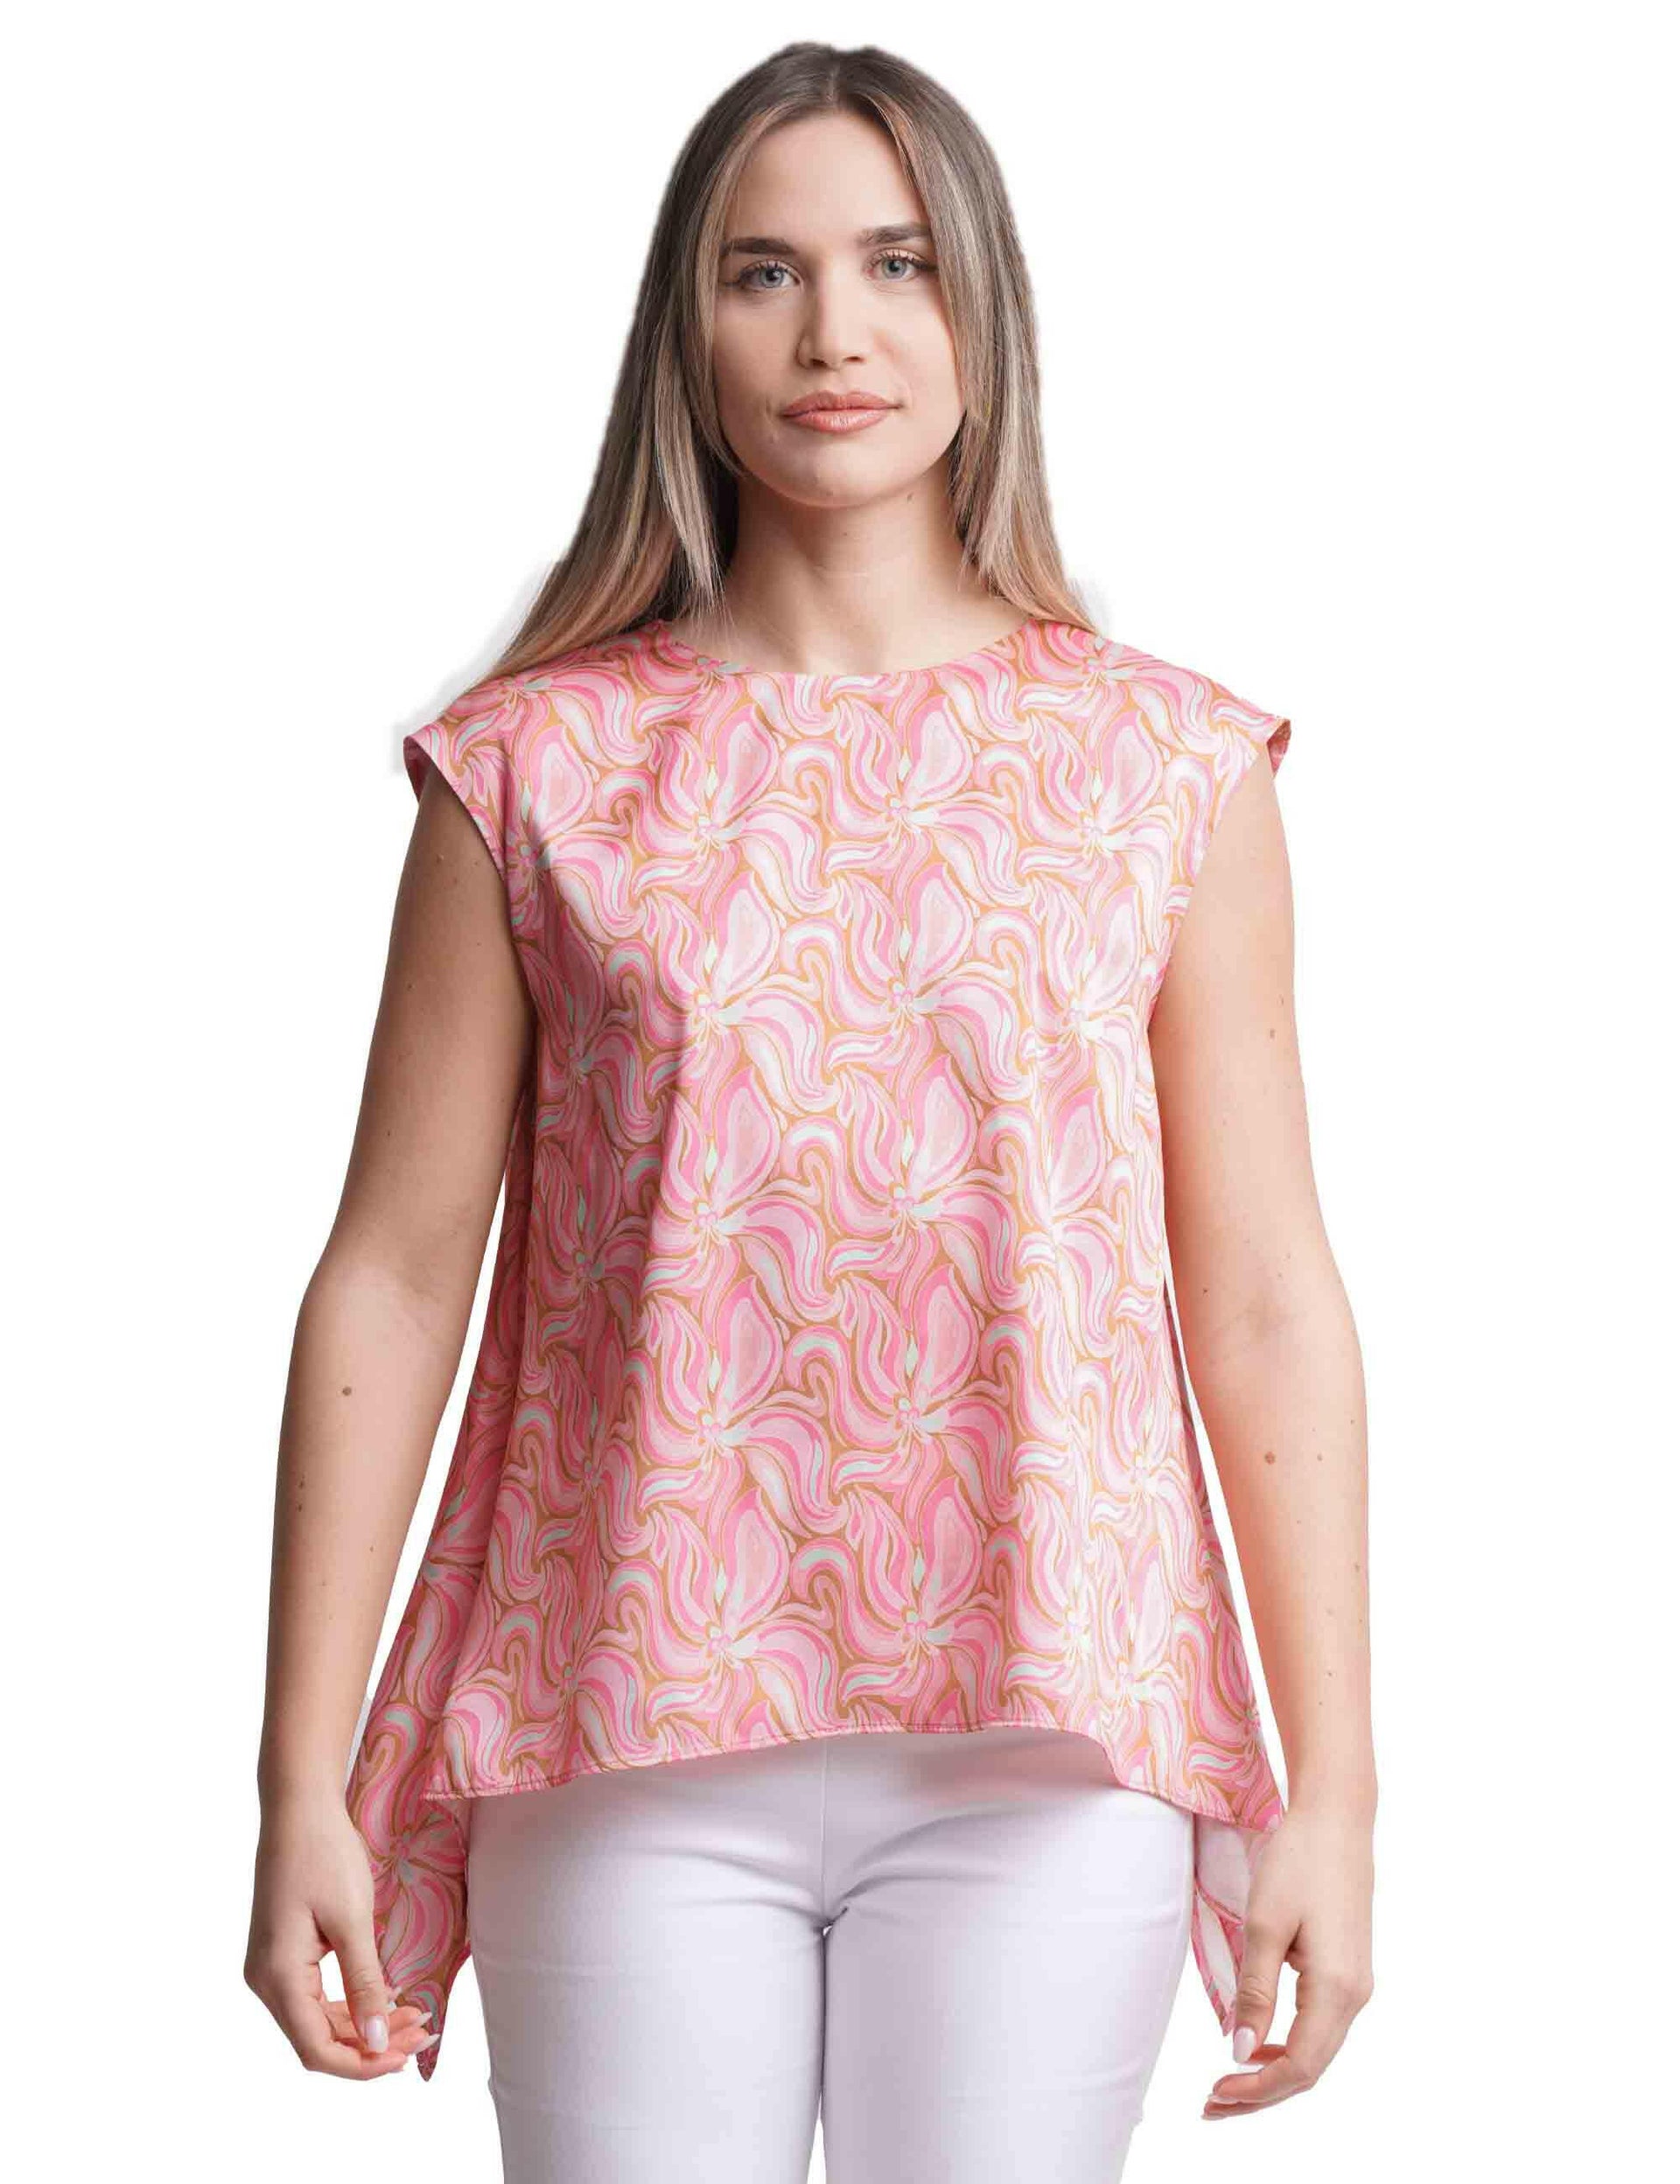 Zephir Print women's tank top in pink twill fabric